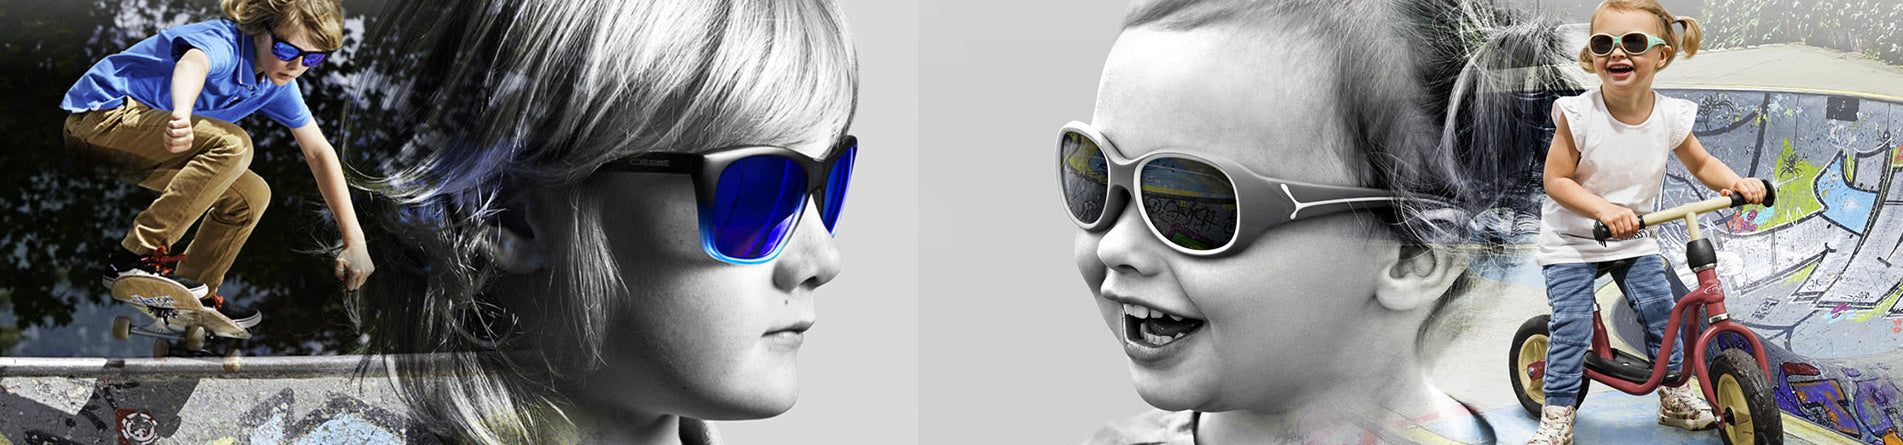 Kids sunglasses - Alive Safety & Rescue Ltd